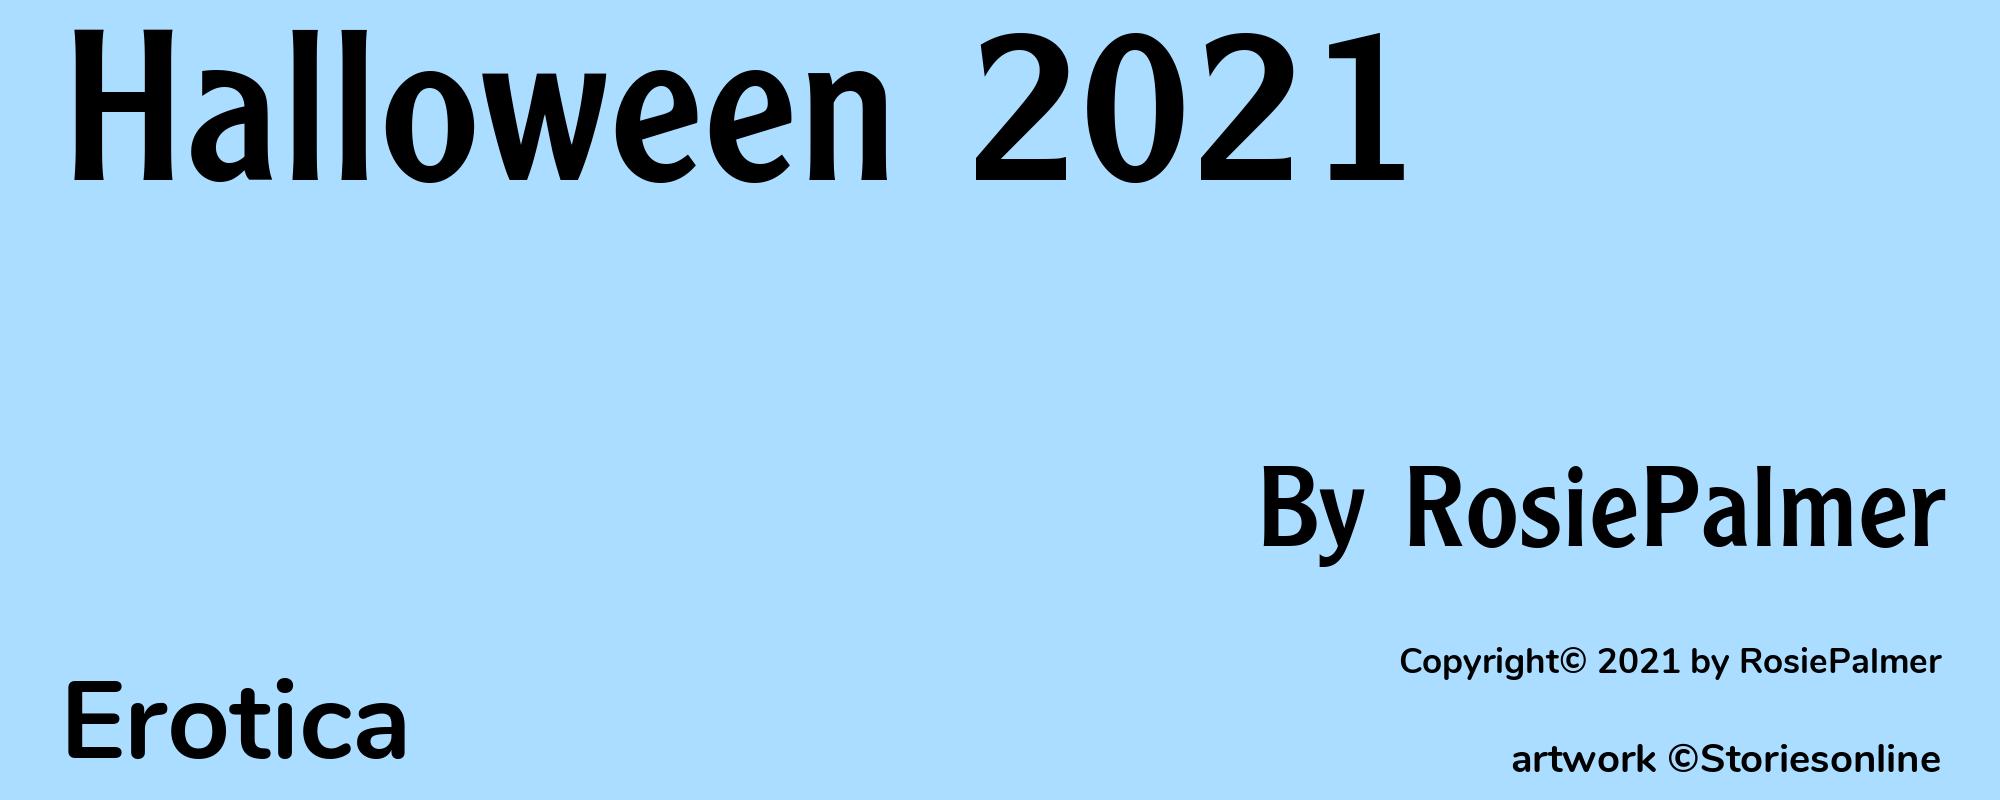 Halloween 2021 - Cover